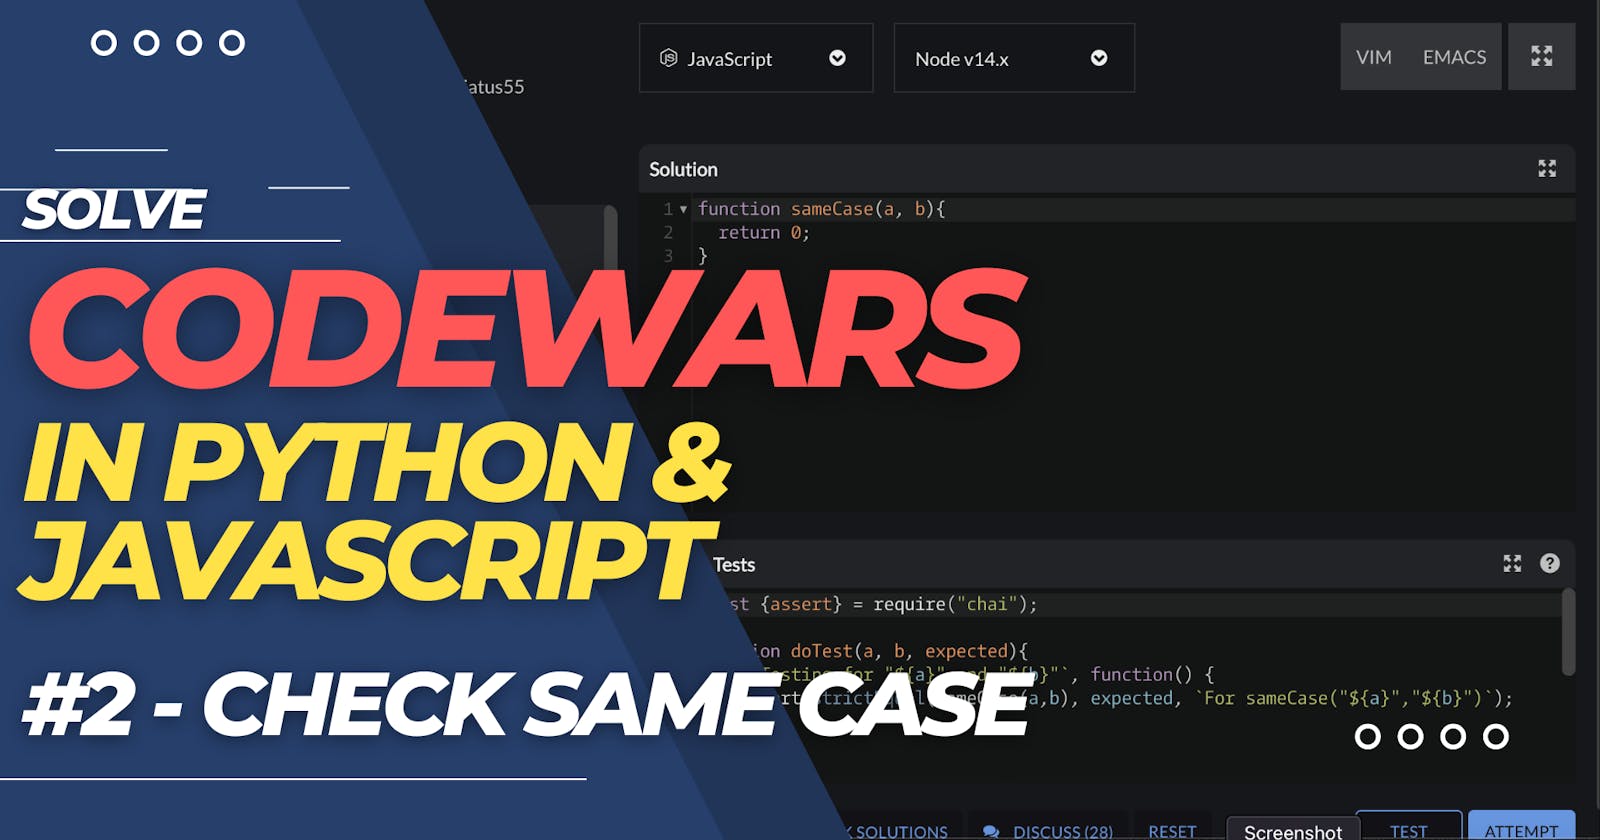 CODEWARS #2 - Check Same Case (solved in Python & Javascript)